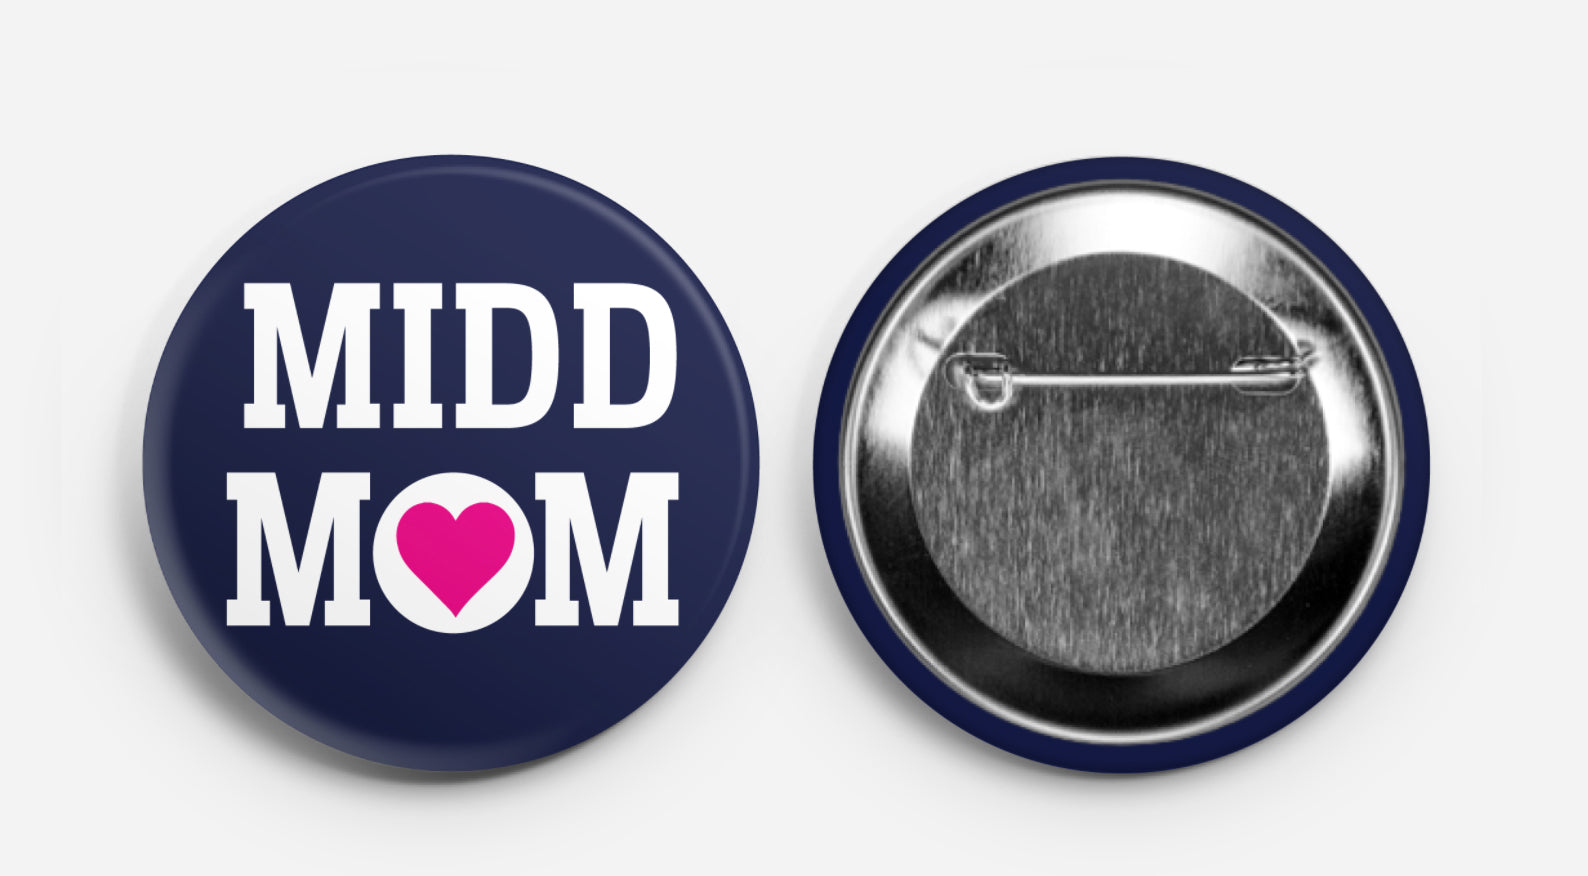 MIDD MOM Button